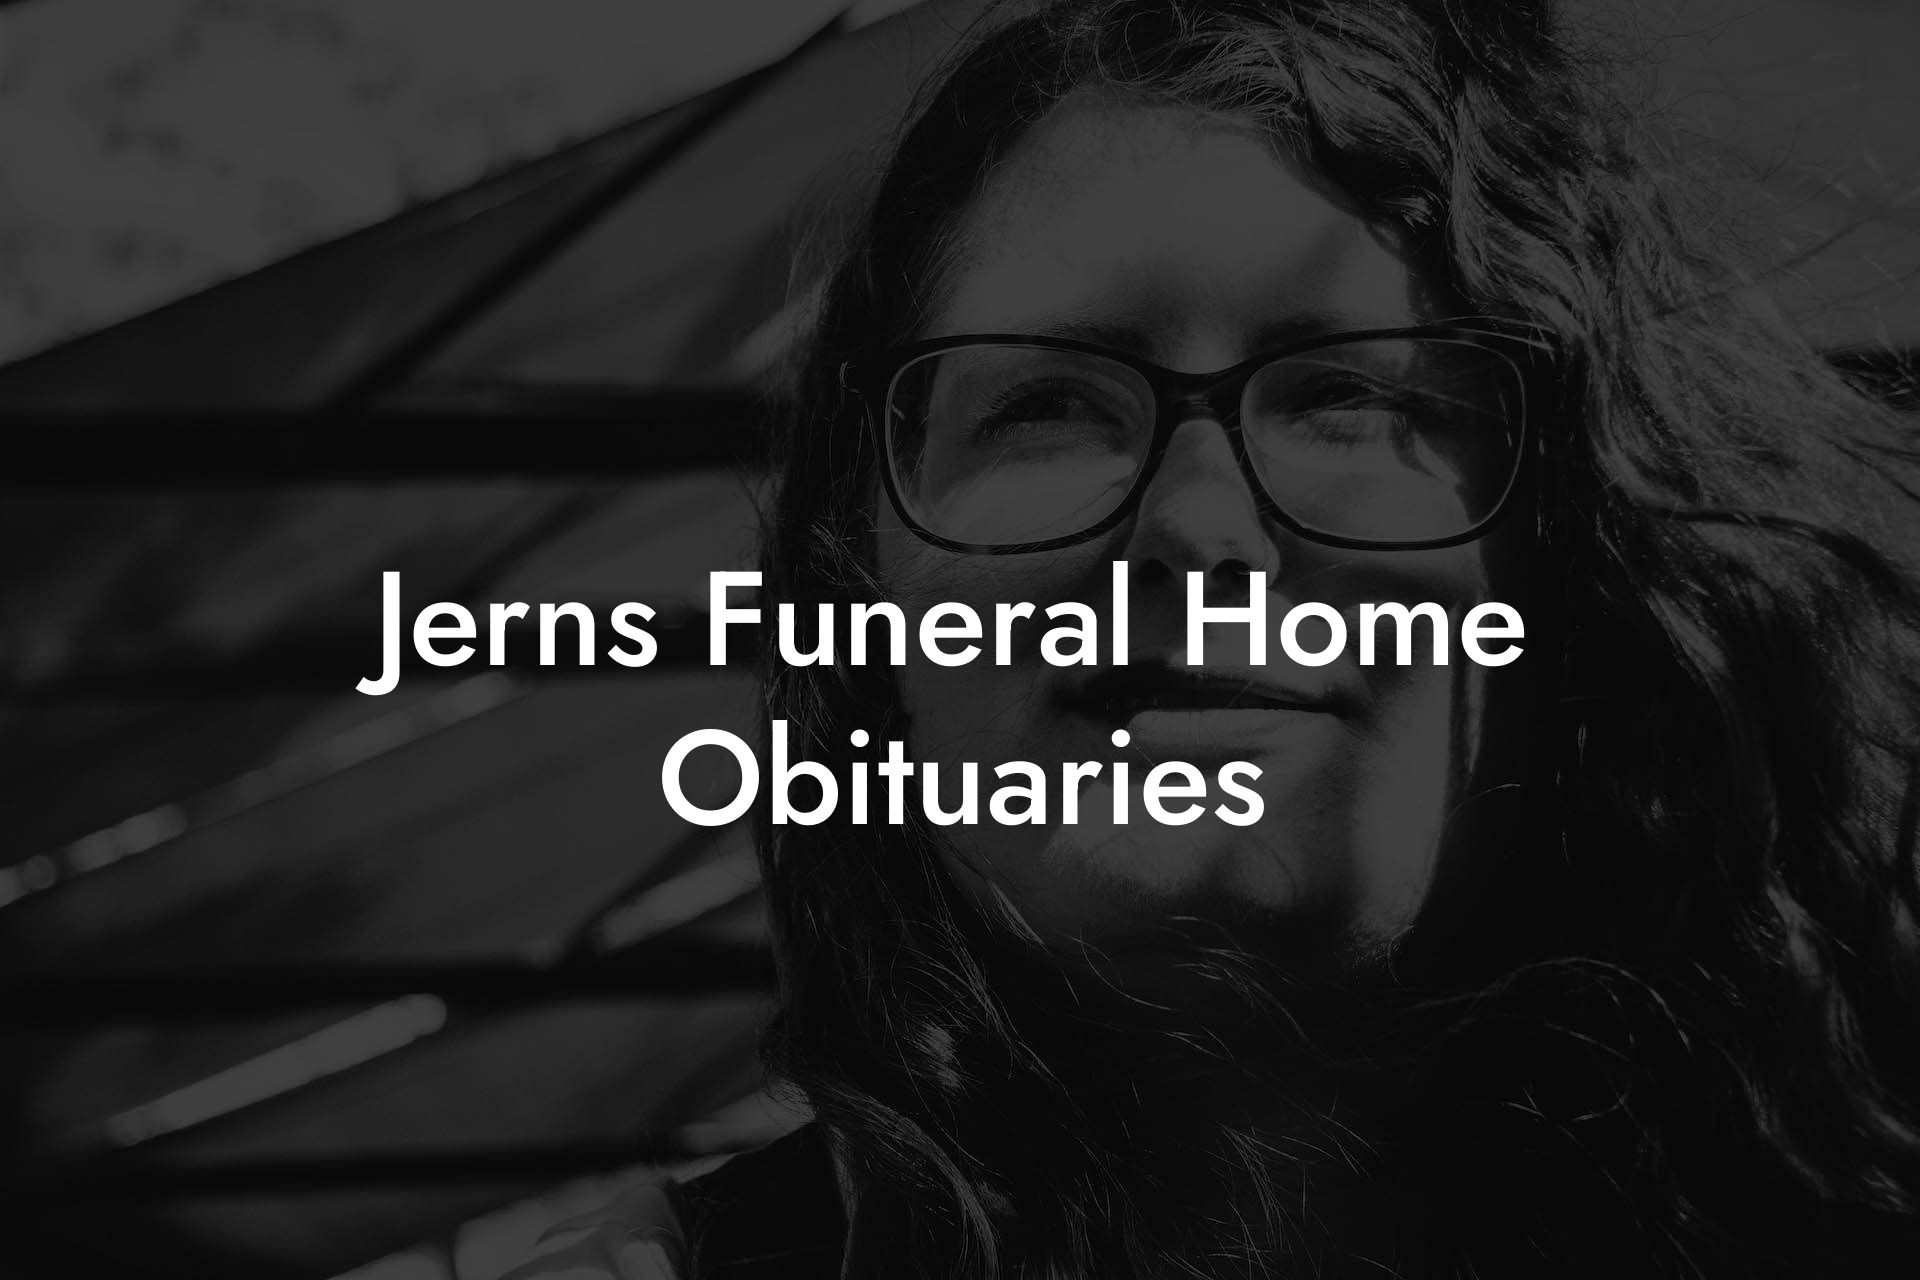 Jerns Funeral Home Obituaries